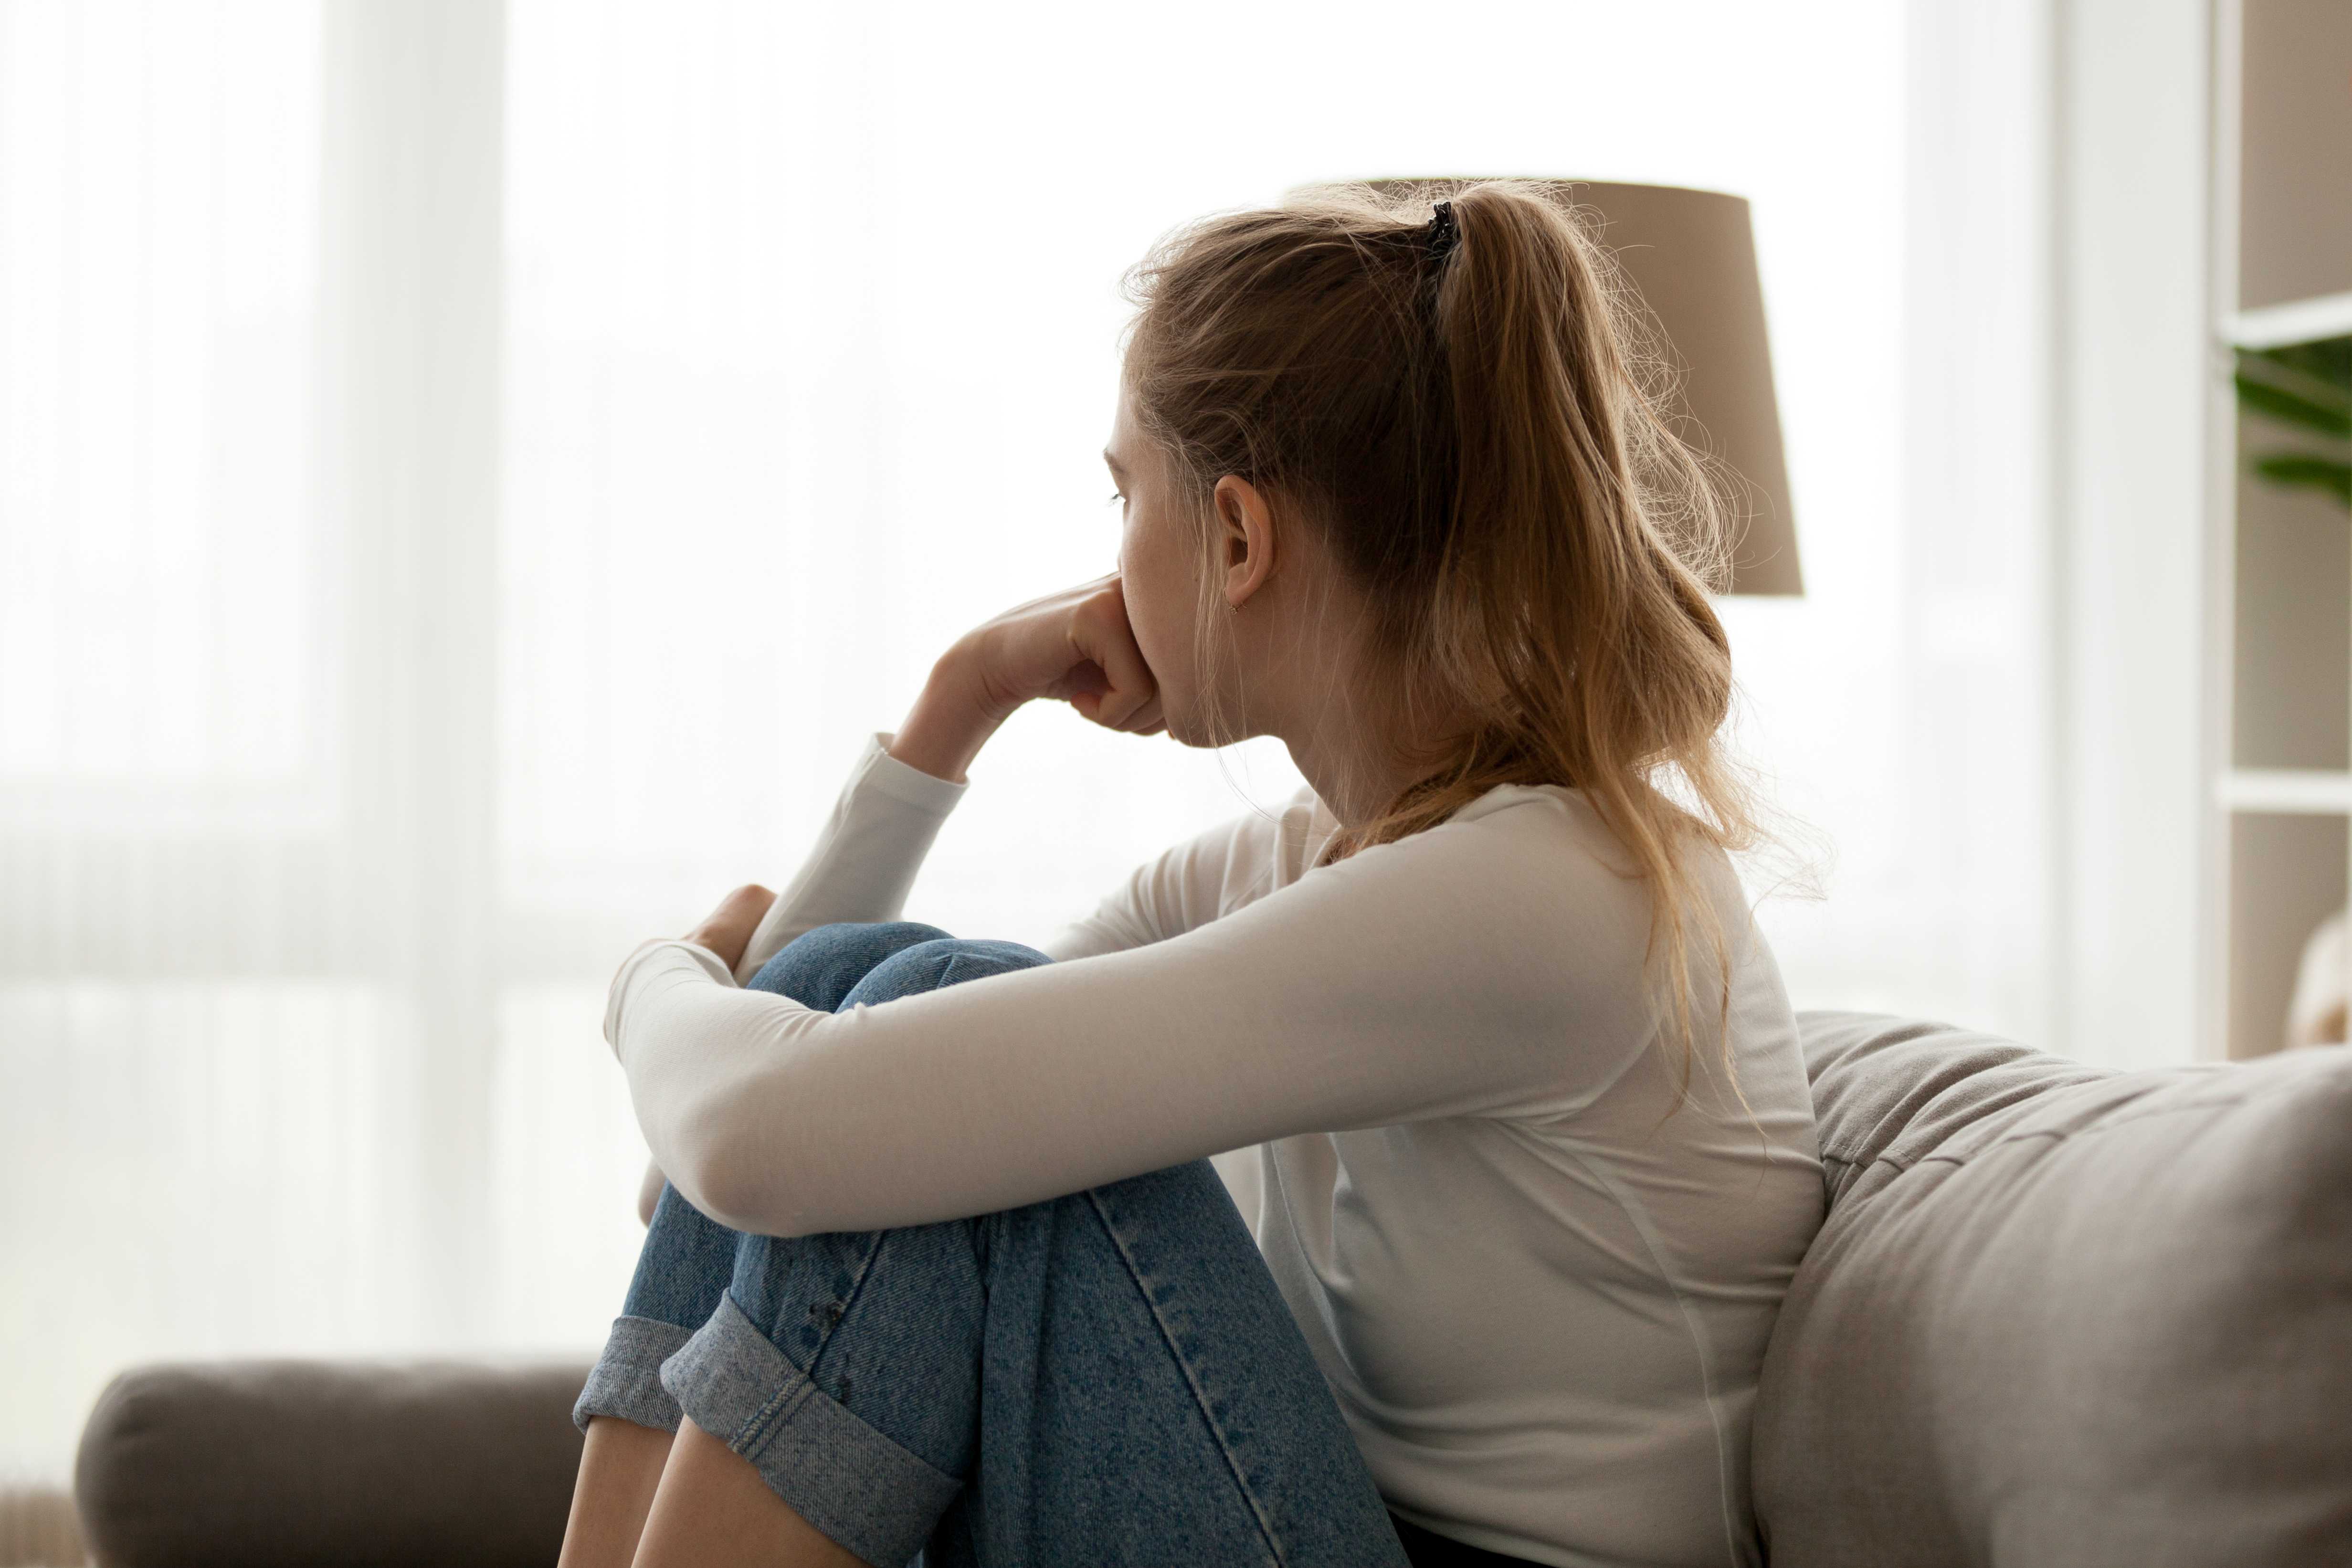 Sad woman is sitting on the sofa | Source: Shutterstock.com